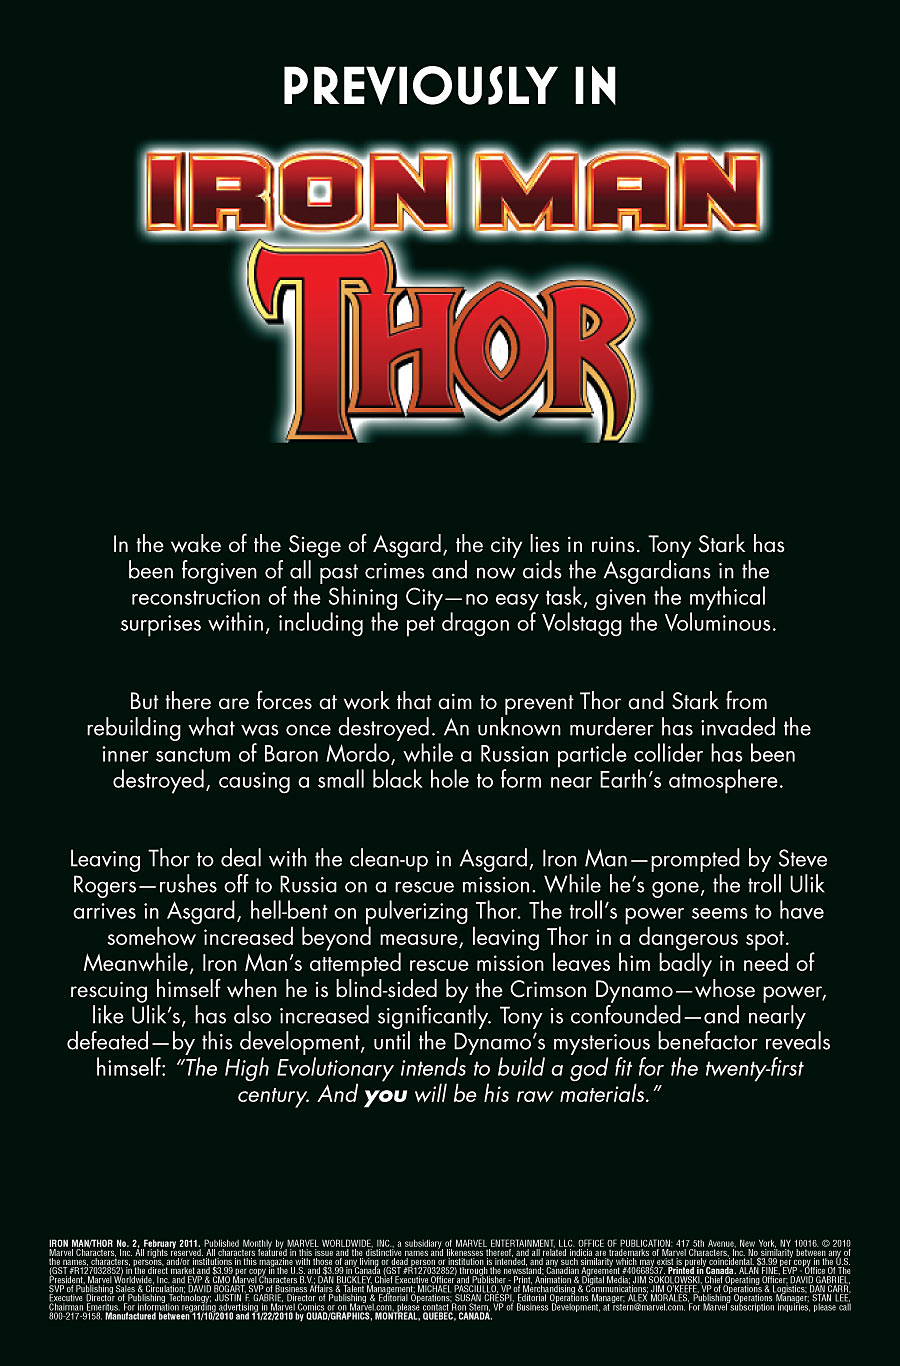 Iron Man / Thor #2 (of 4) Prv71033